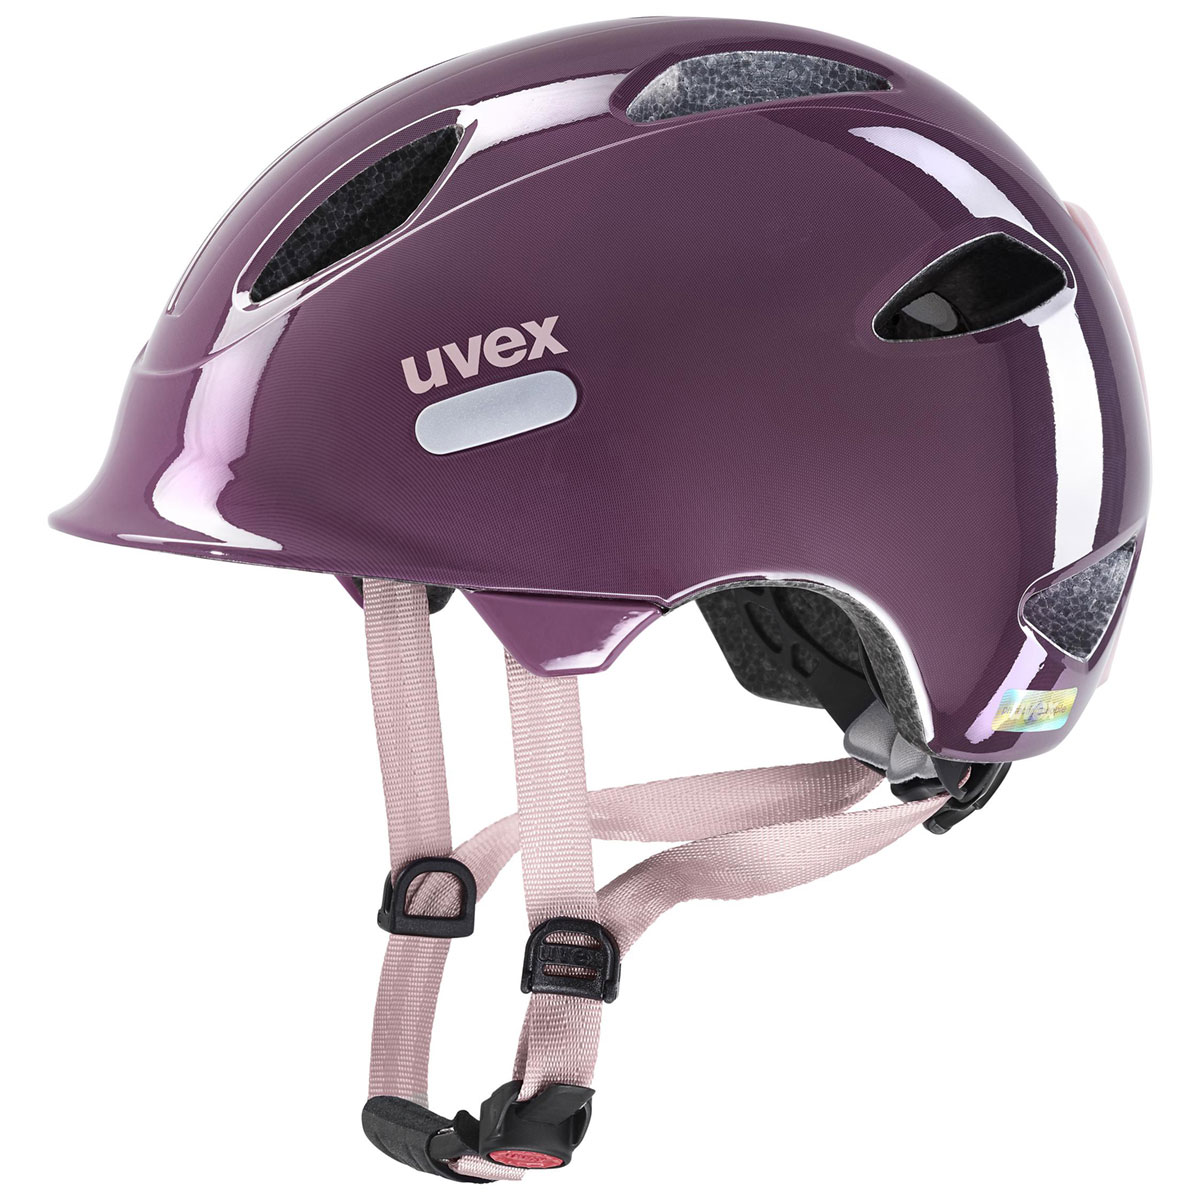 Dětská cyklistická helma Uvex OYO, Plum - Dust Rose 50-54cm